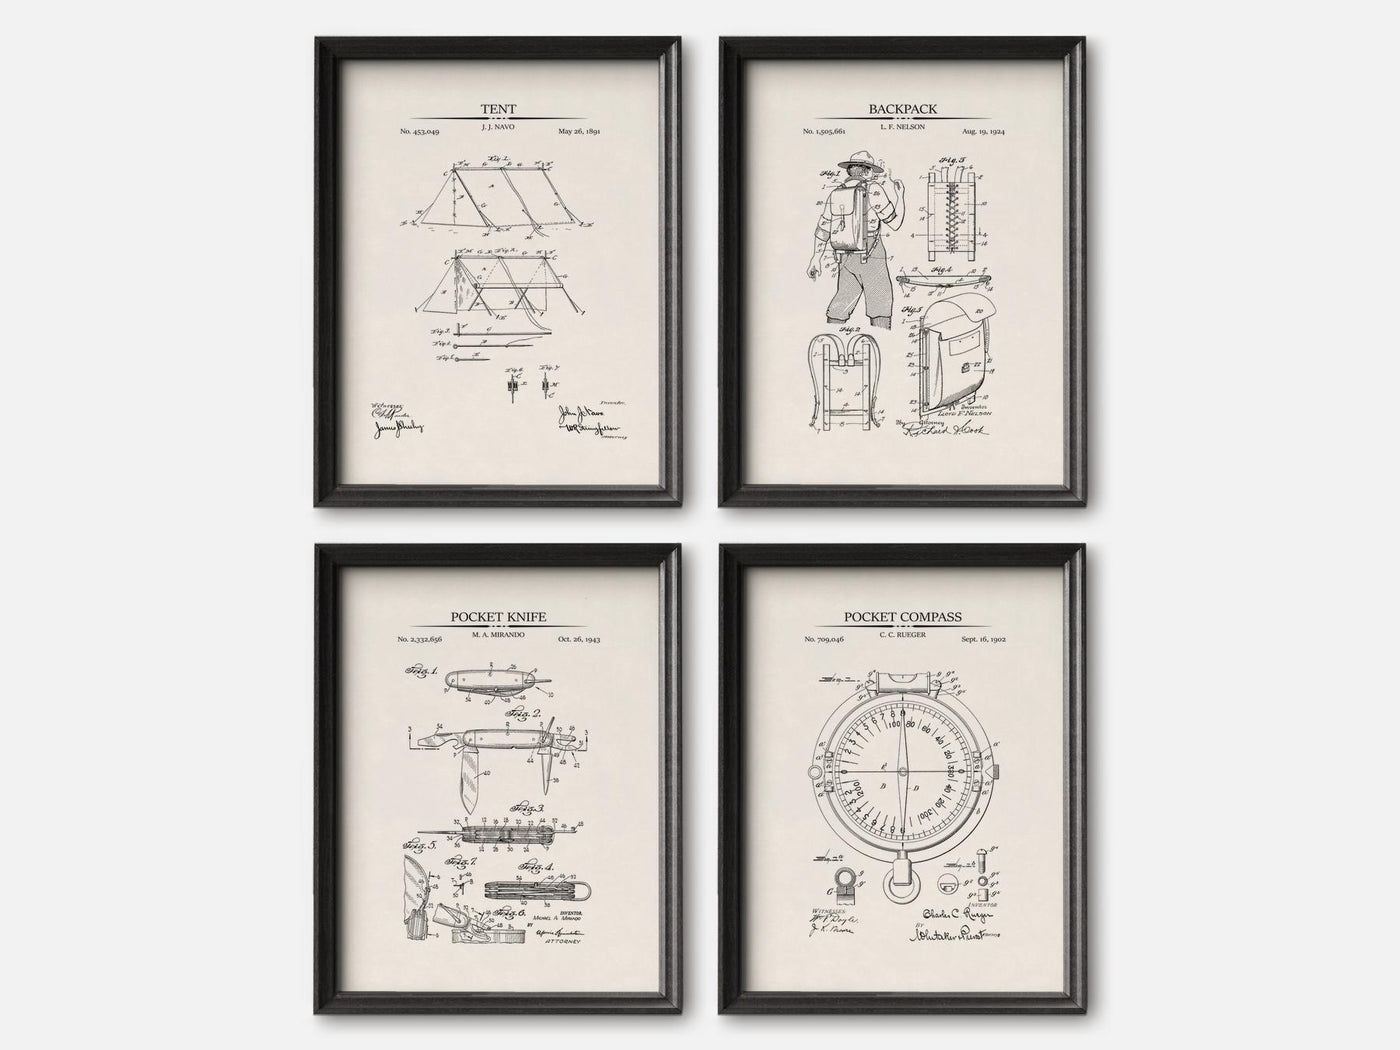 Camping Patent Print Set of 3 mockup - A_t10017-V1-PC_F+B-SS_4-PS_5x7-C_ivo variant